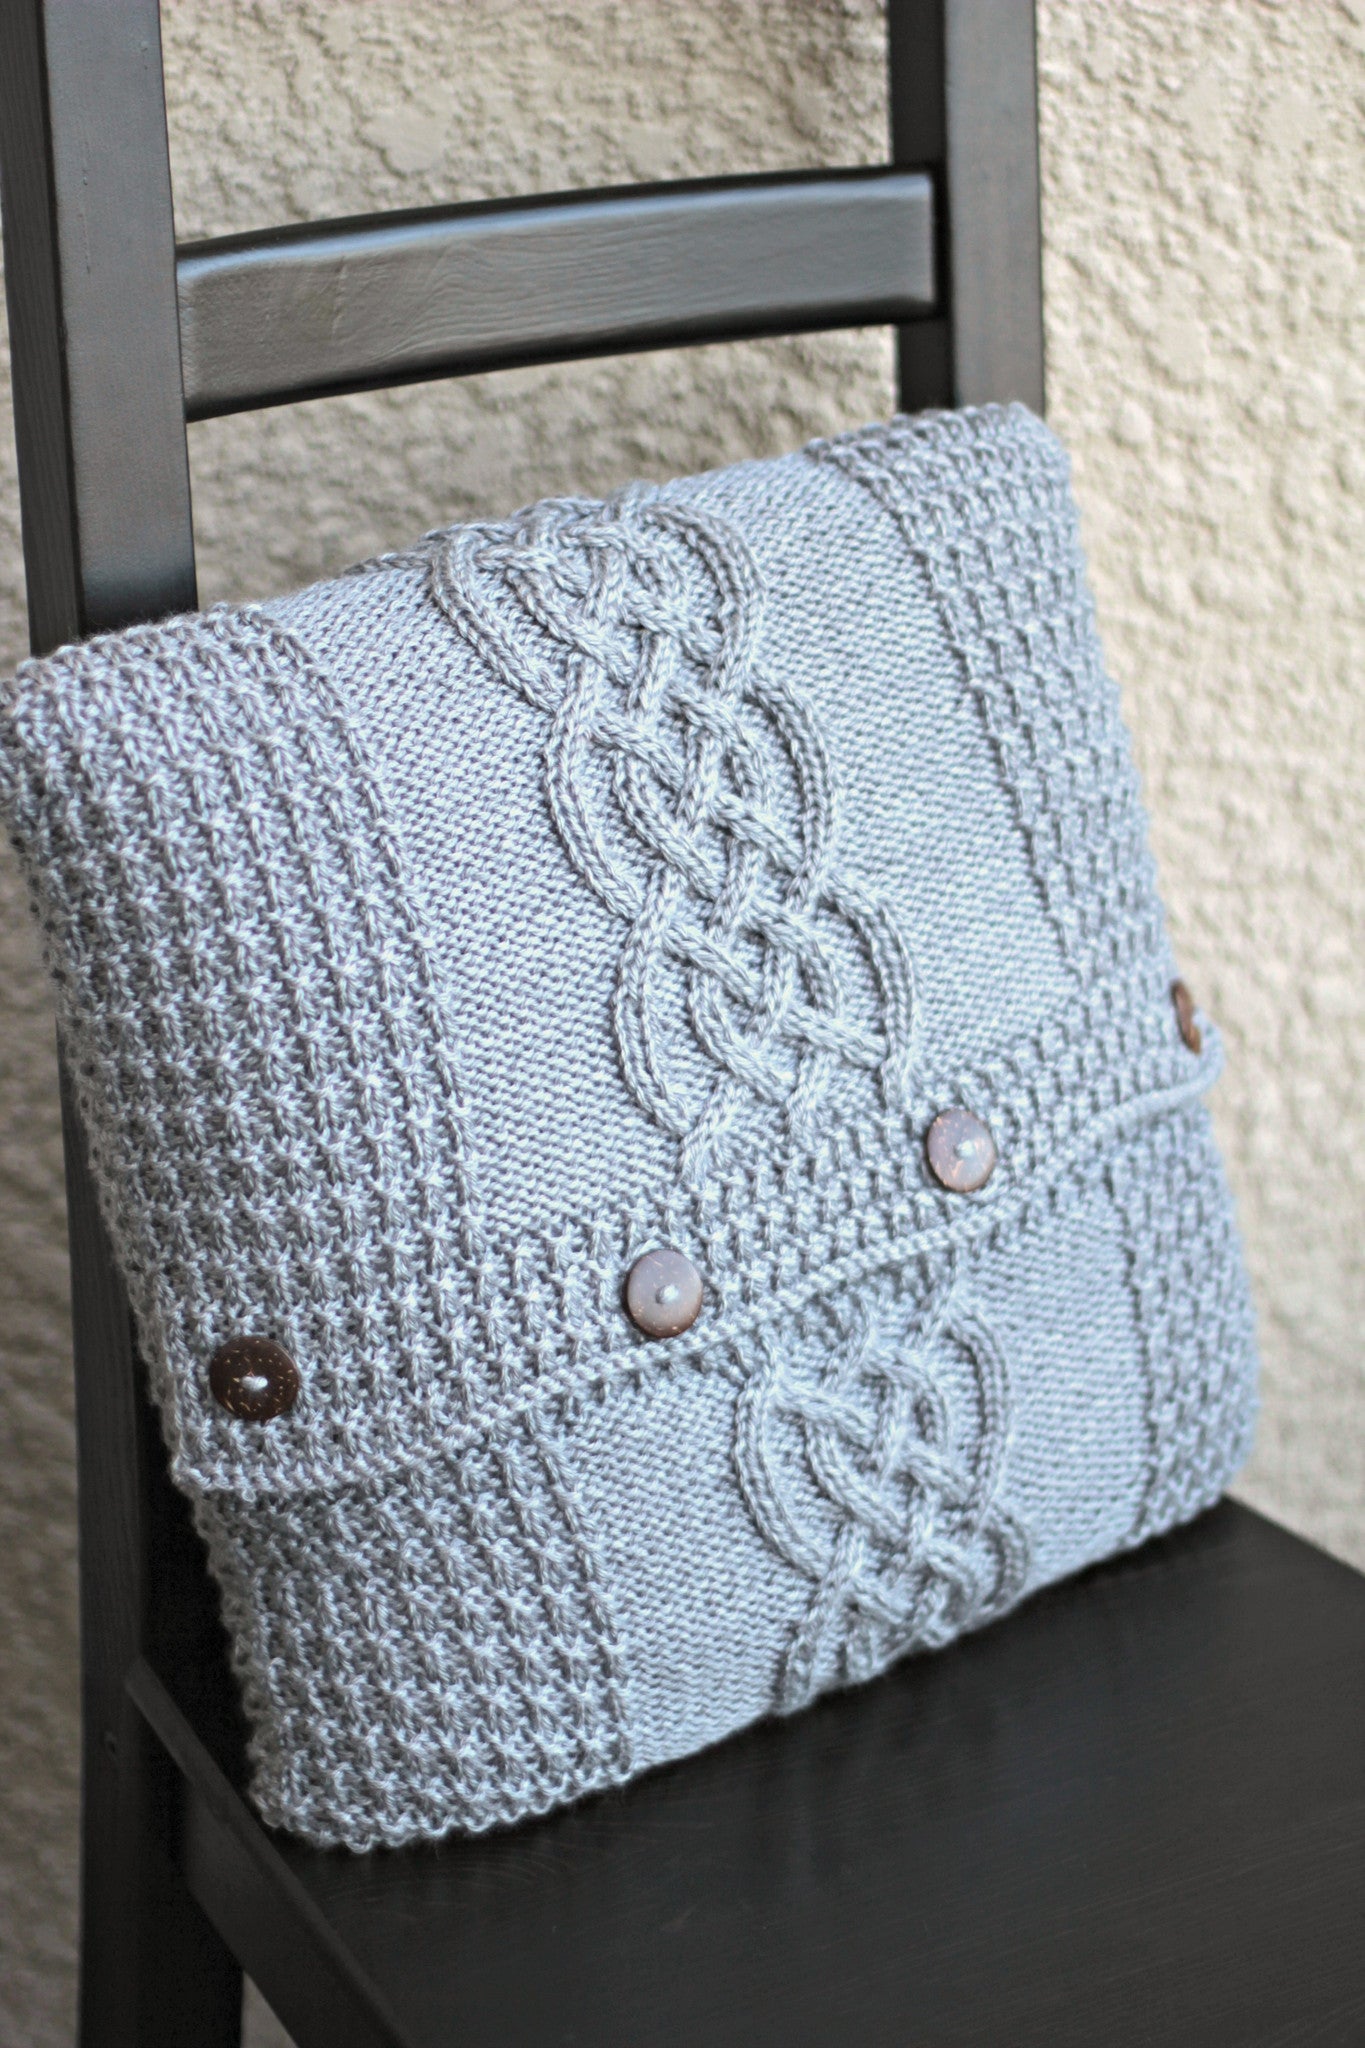 Knit pillow case